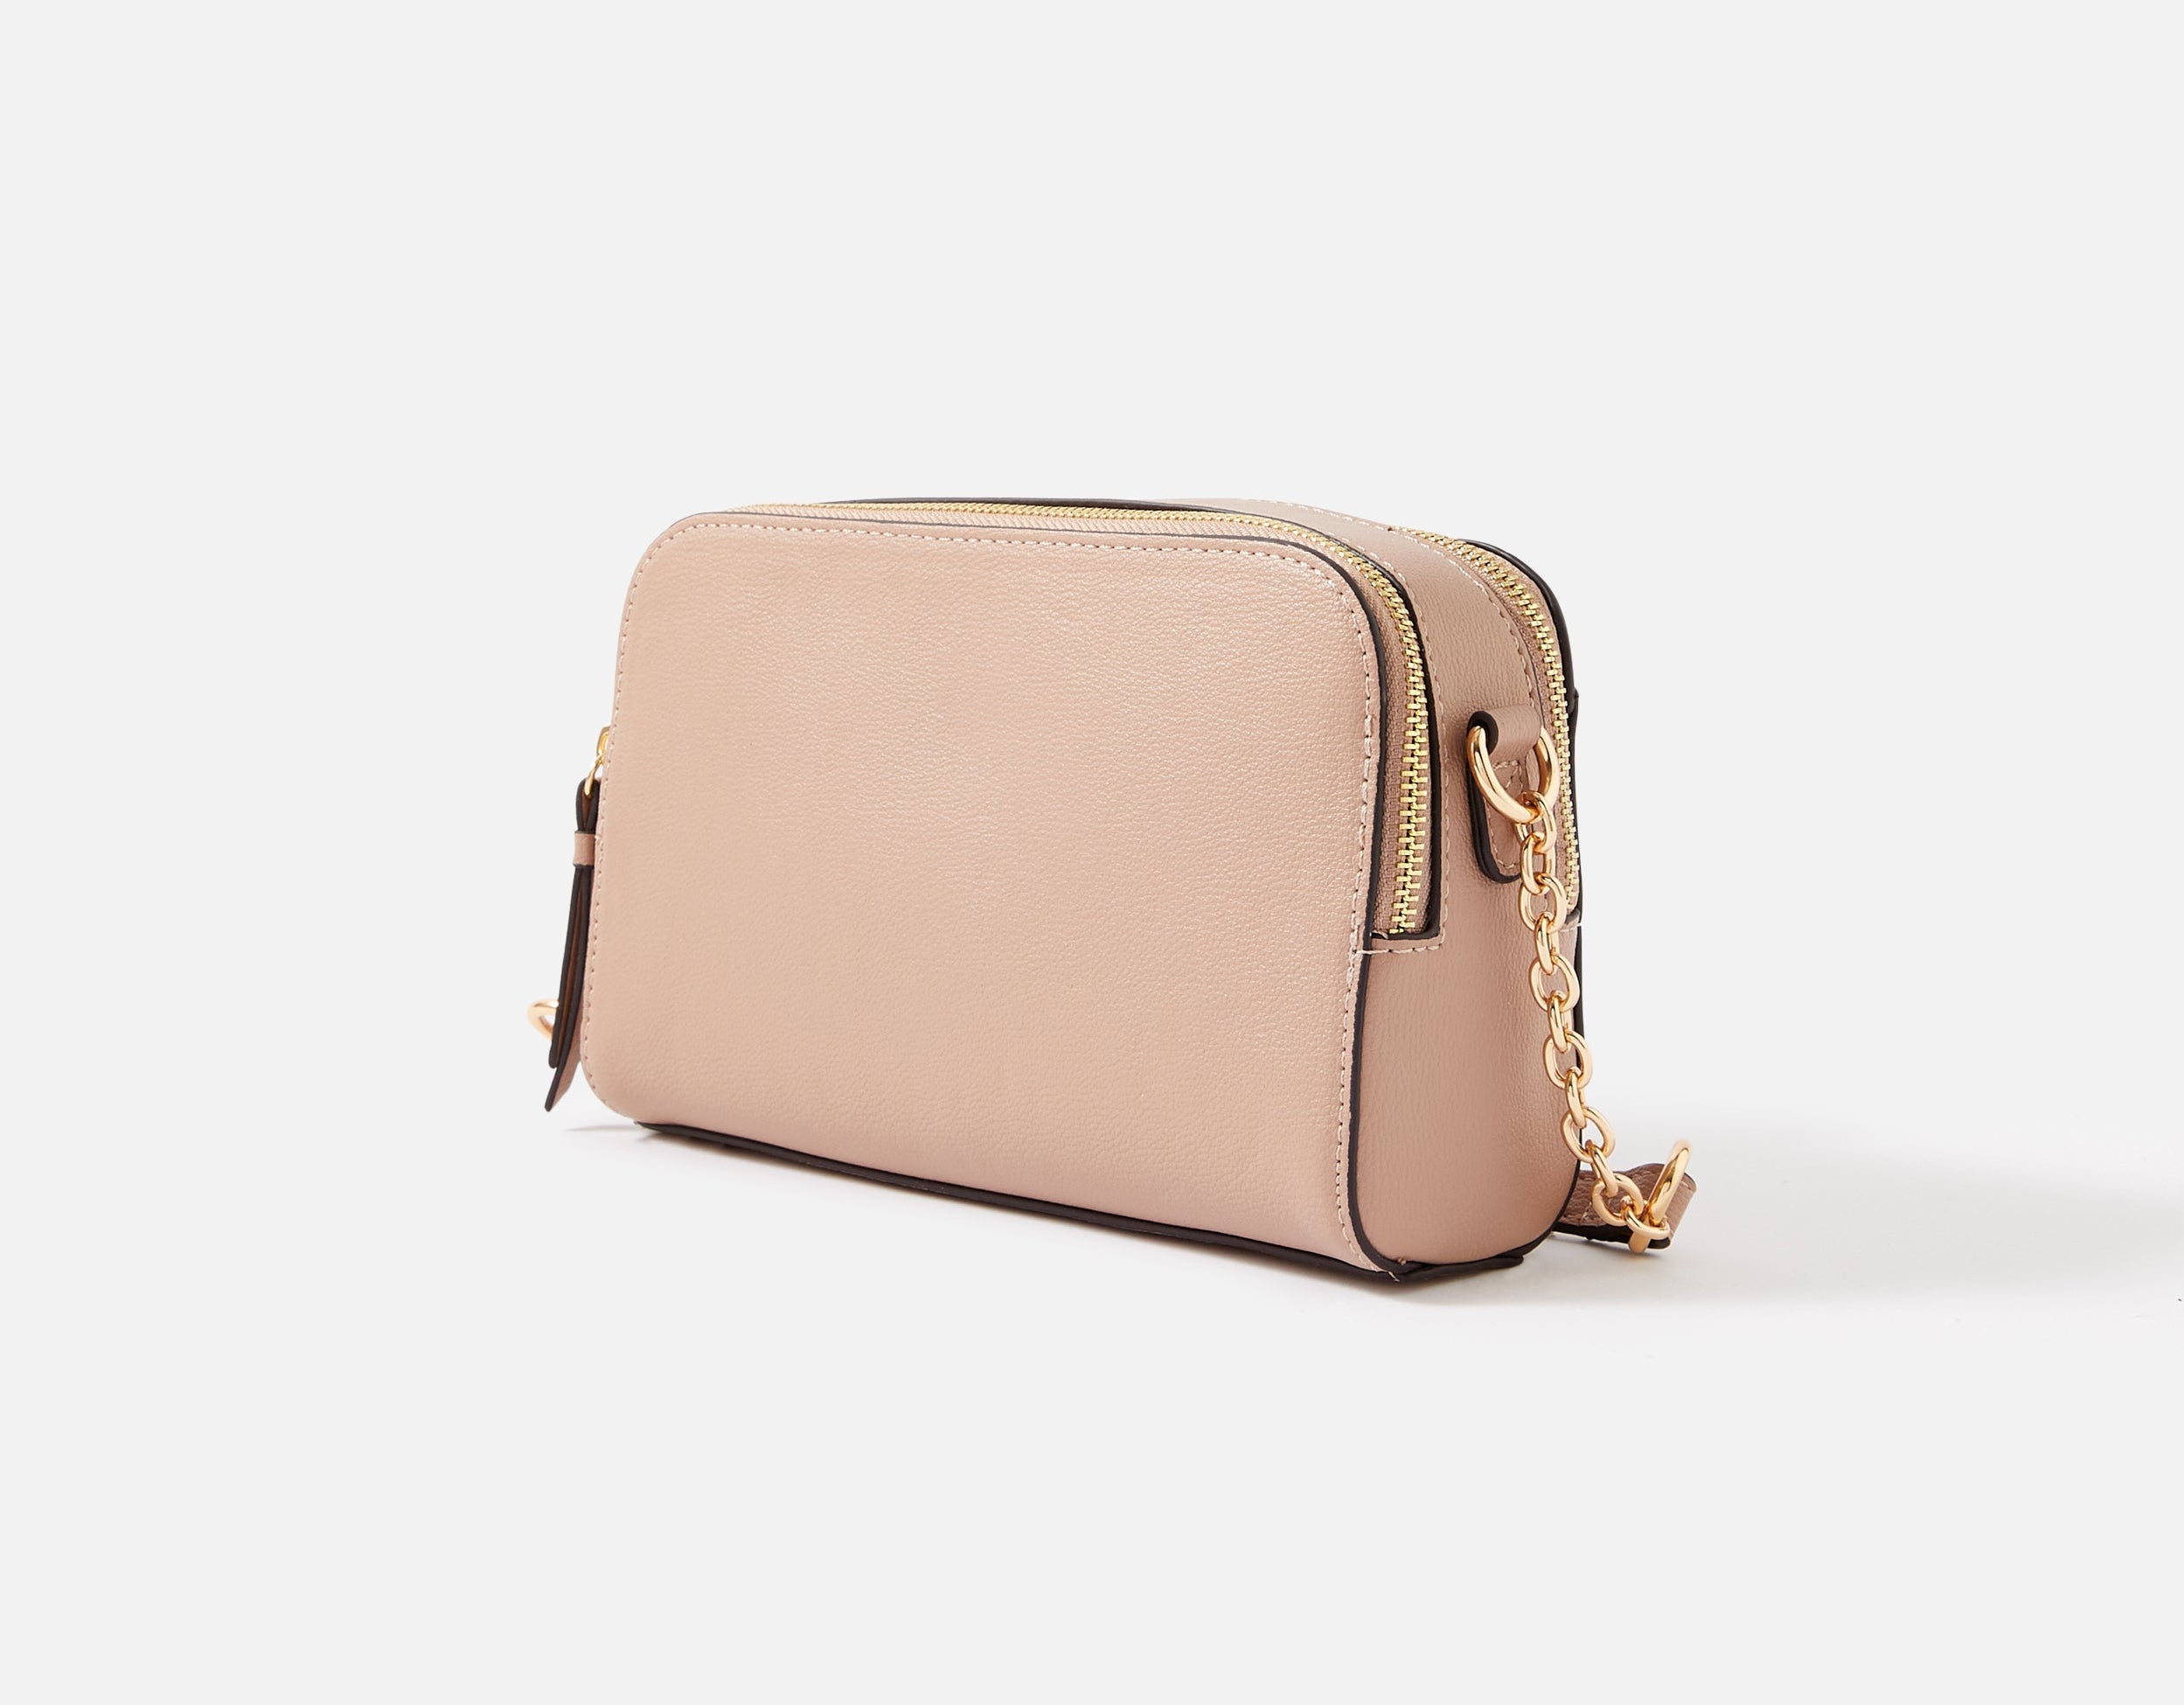 Accessorize London women's Faux Leather Pink Leona Lock Sling bag